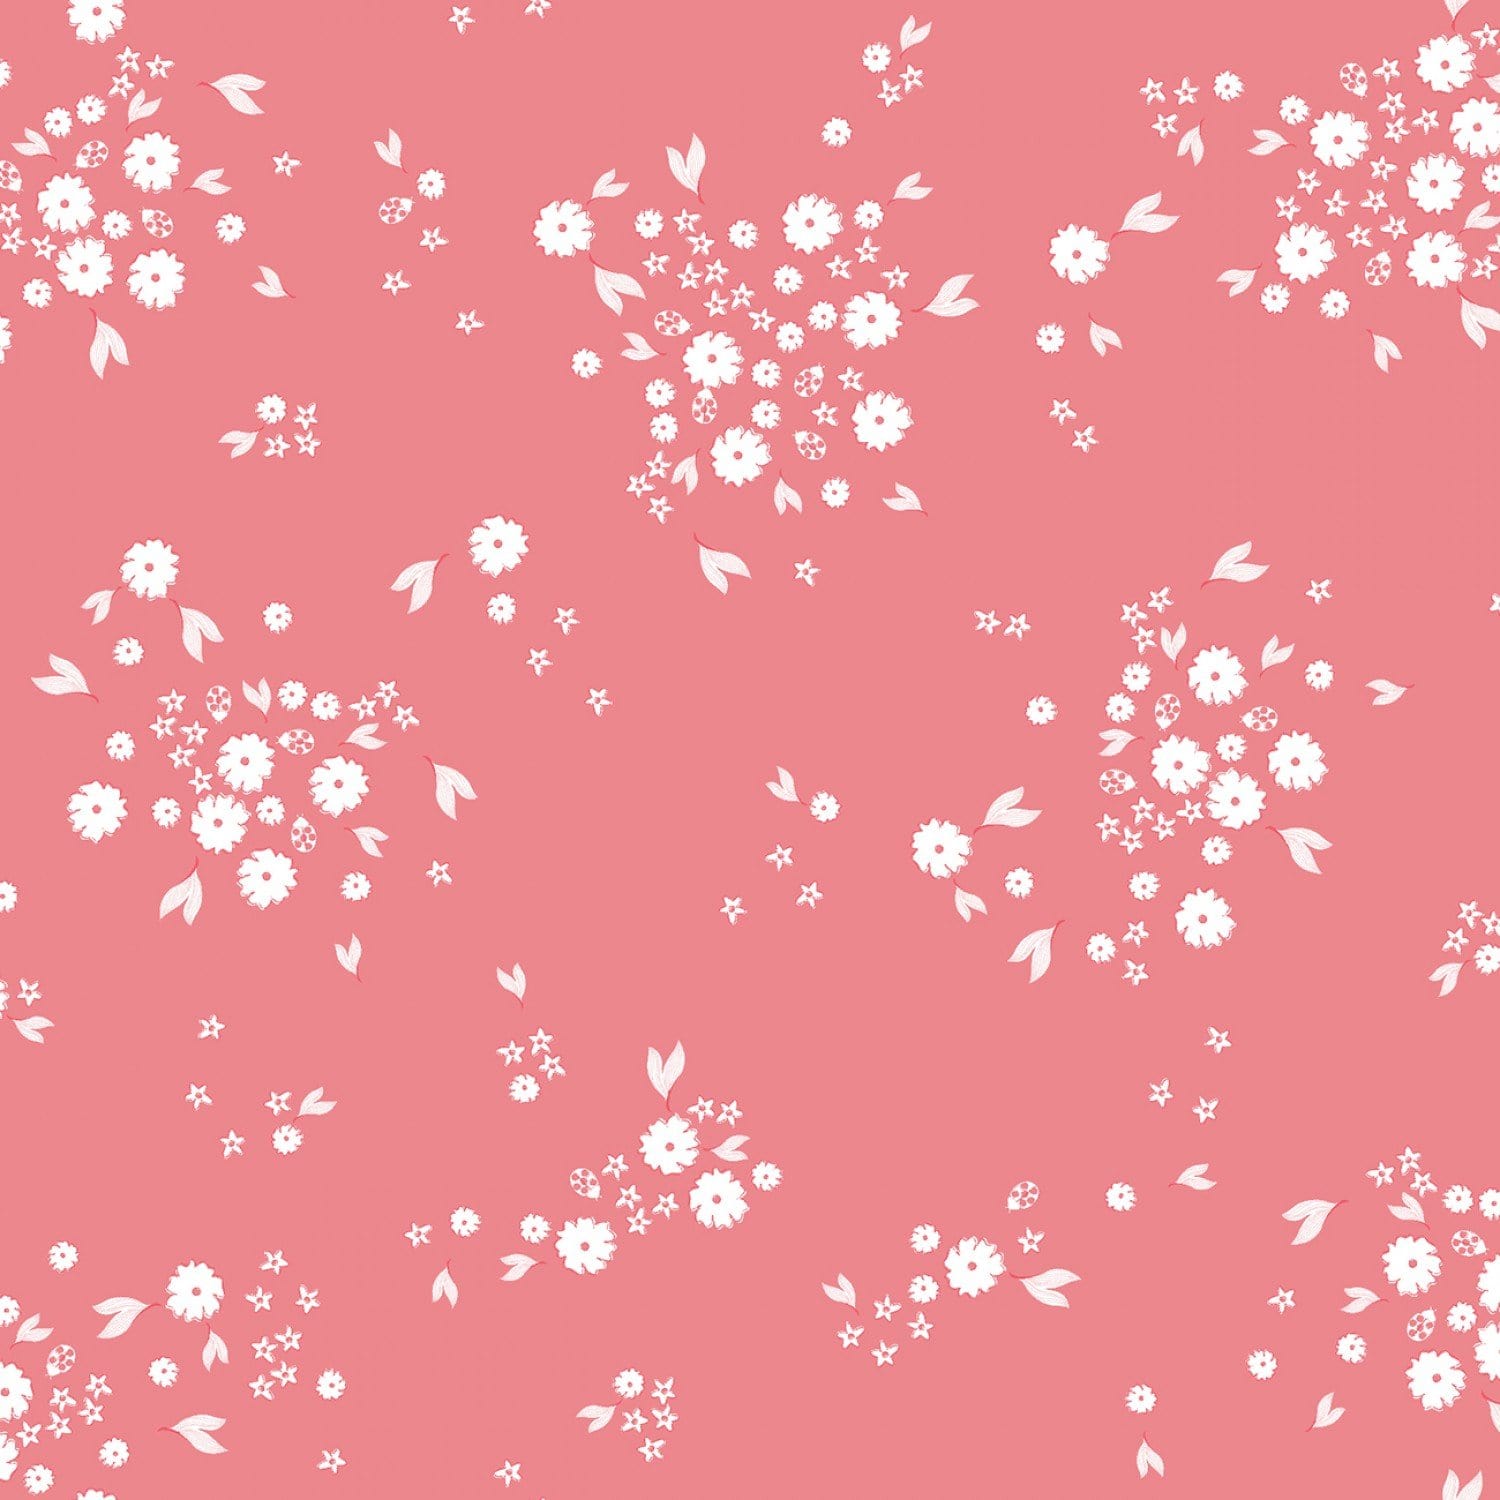 Ladybug Mania - Dark Coral Small Floral- Y3176-40 - Clothworks - Kids Prints - Flower